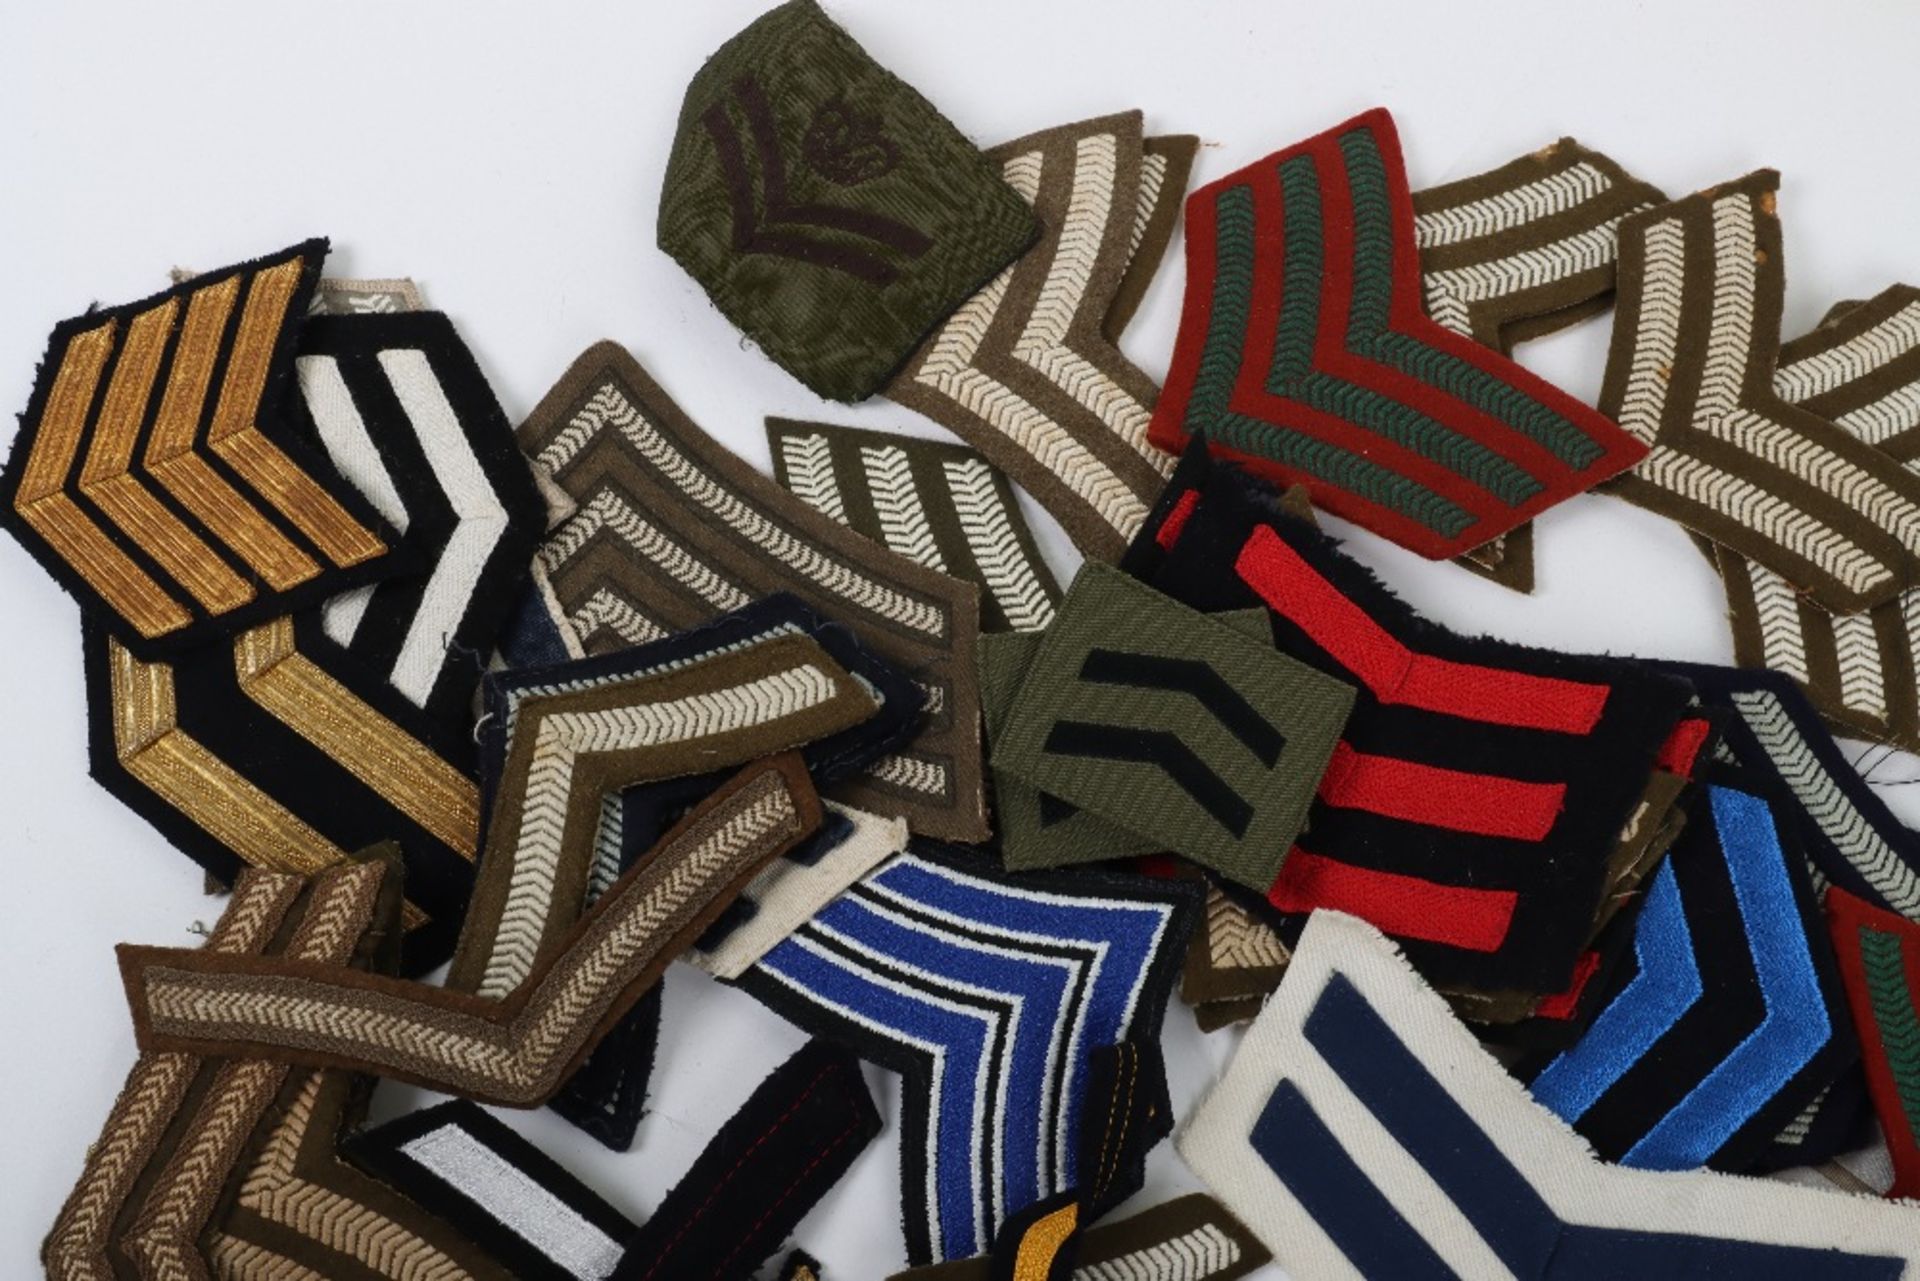 Quantity of British Cloth Rank Stripes - Image 3 of 3